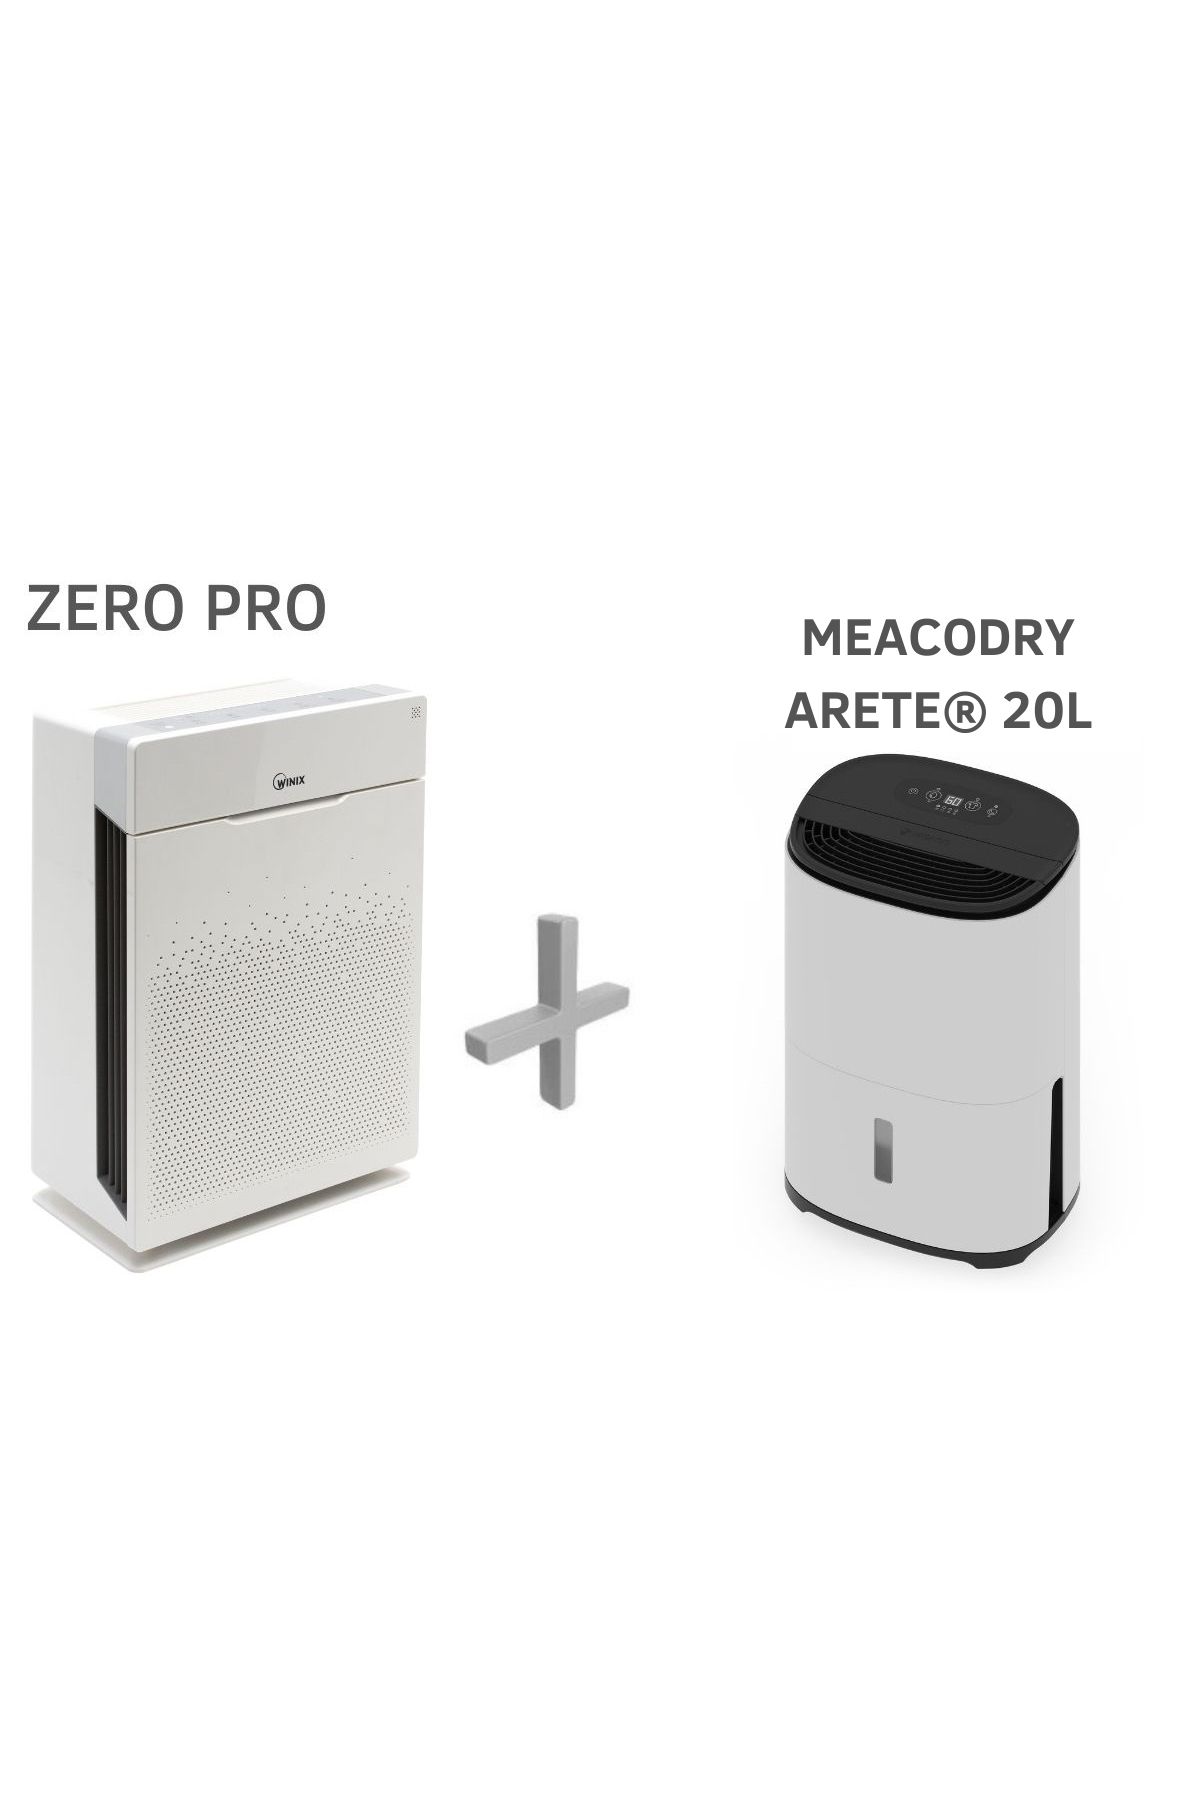 Winix Zero Pro Hava Temizleme Cihazı ve MeacoDry Arete® 20L Nem Alma Cihazı